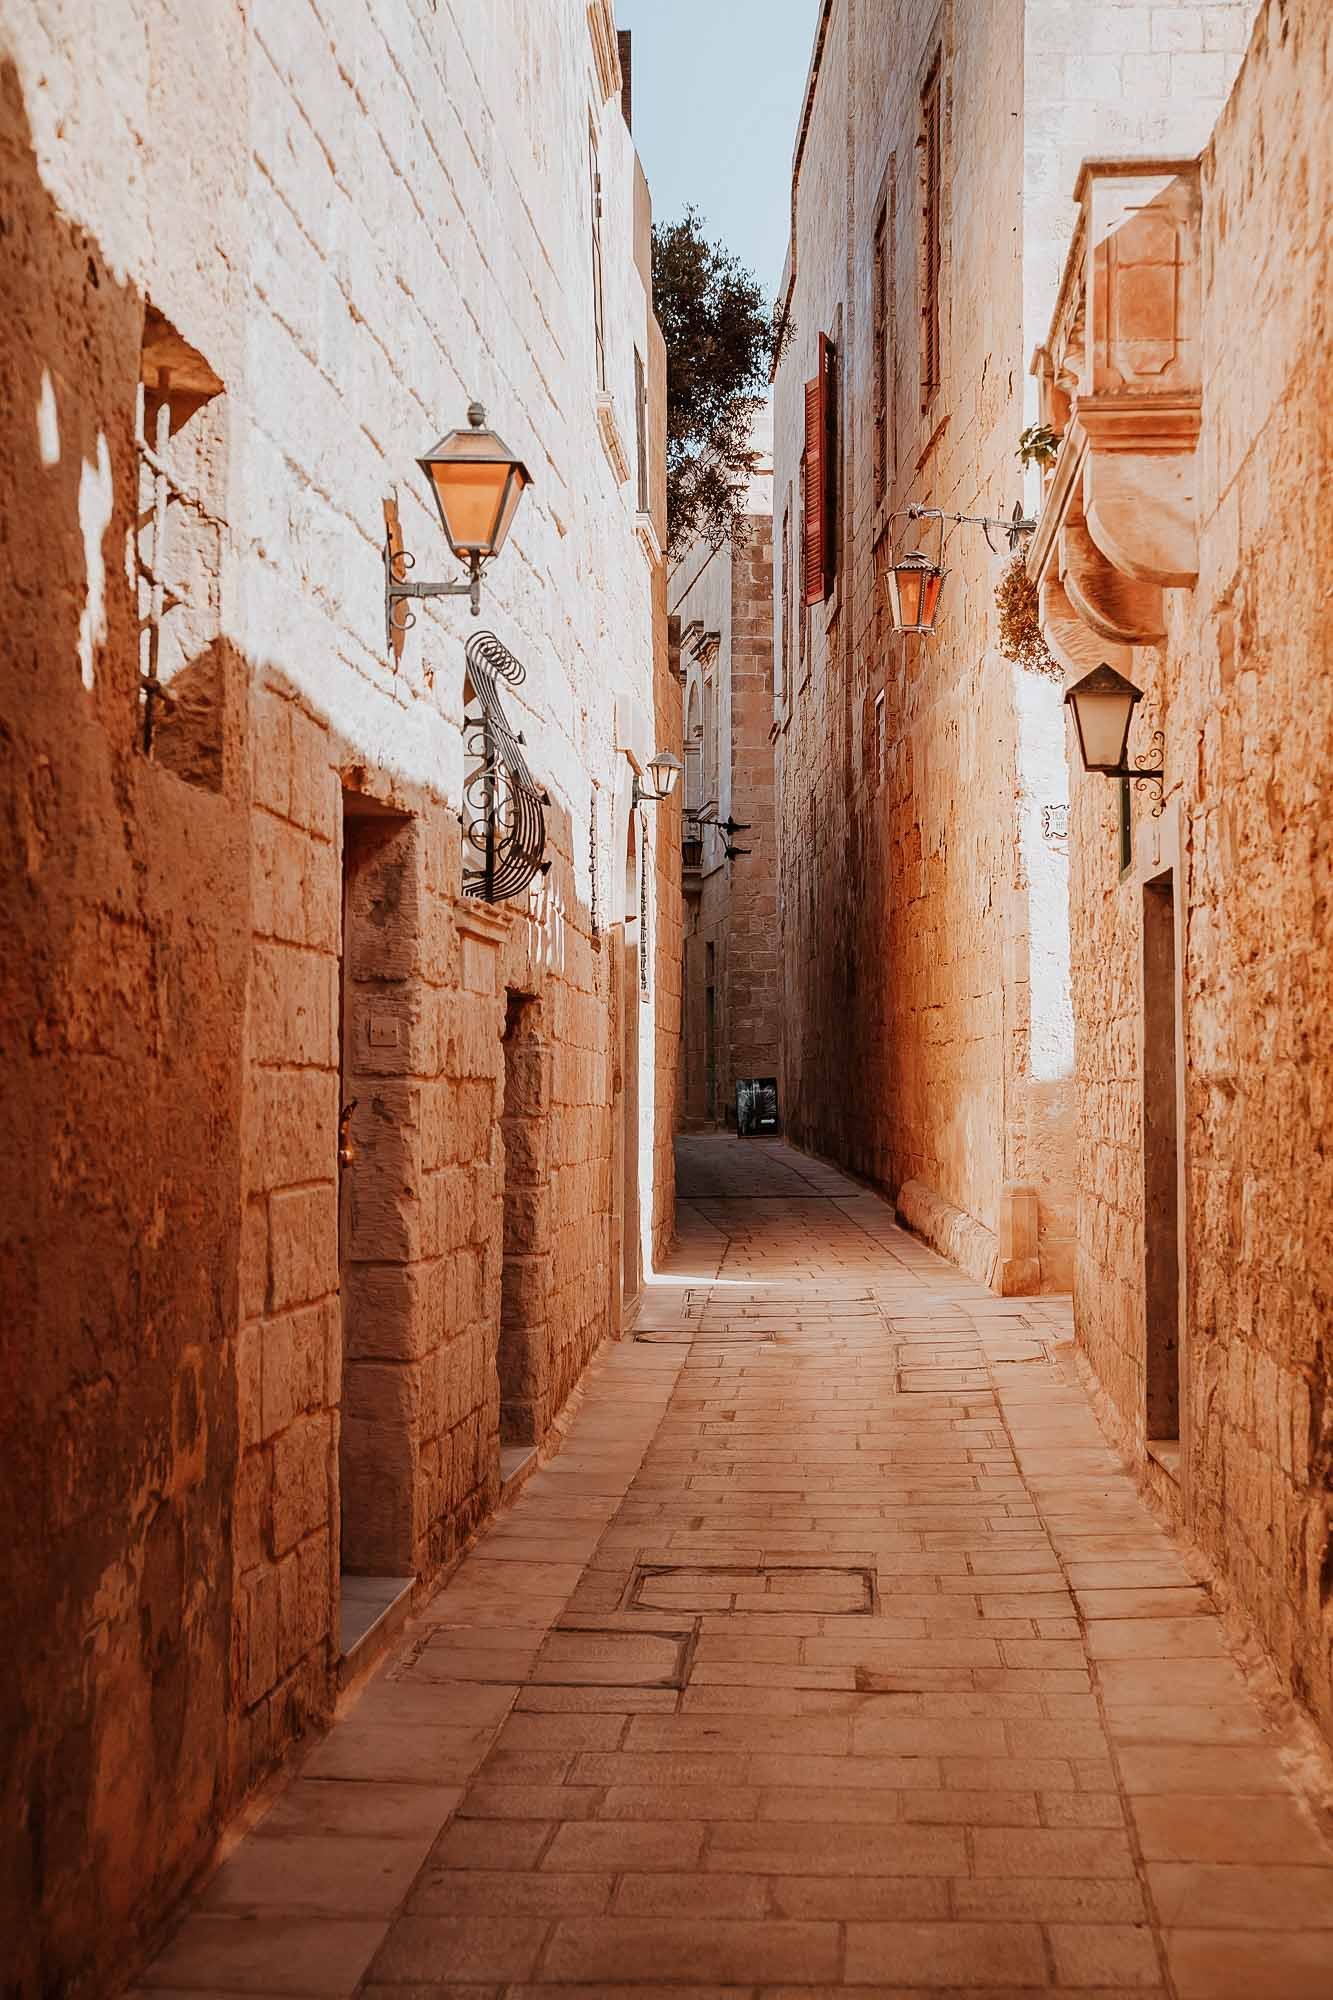 Narrow lanes inside the Mdina from Valletta to Mdina